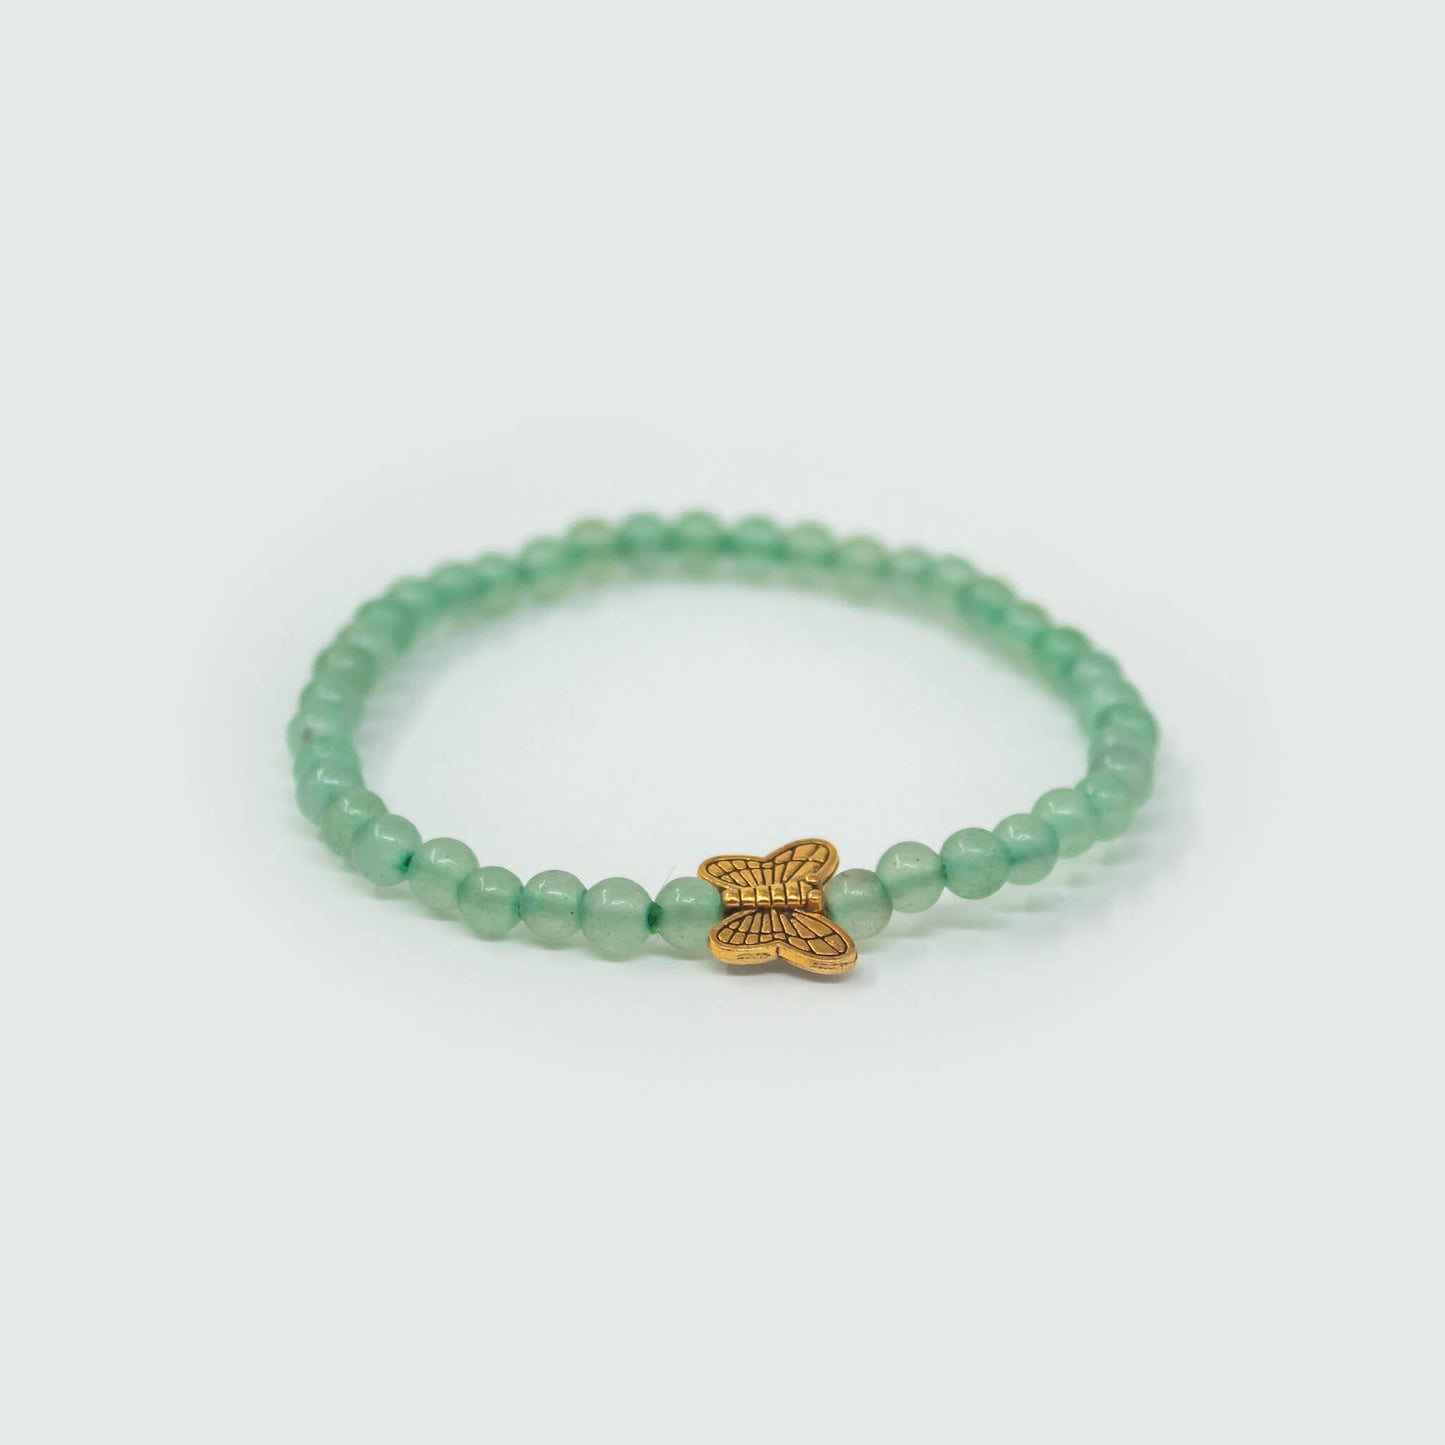 butterfly charm 4mm green aventurine bracelet